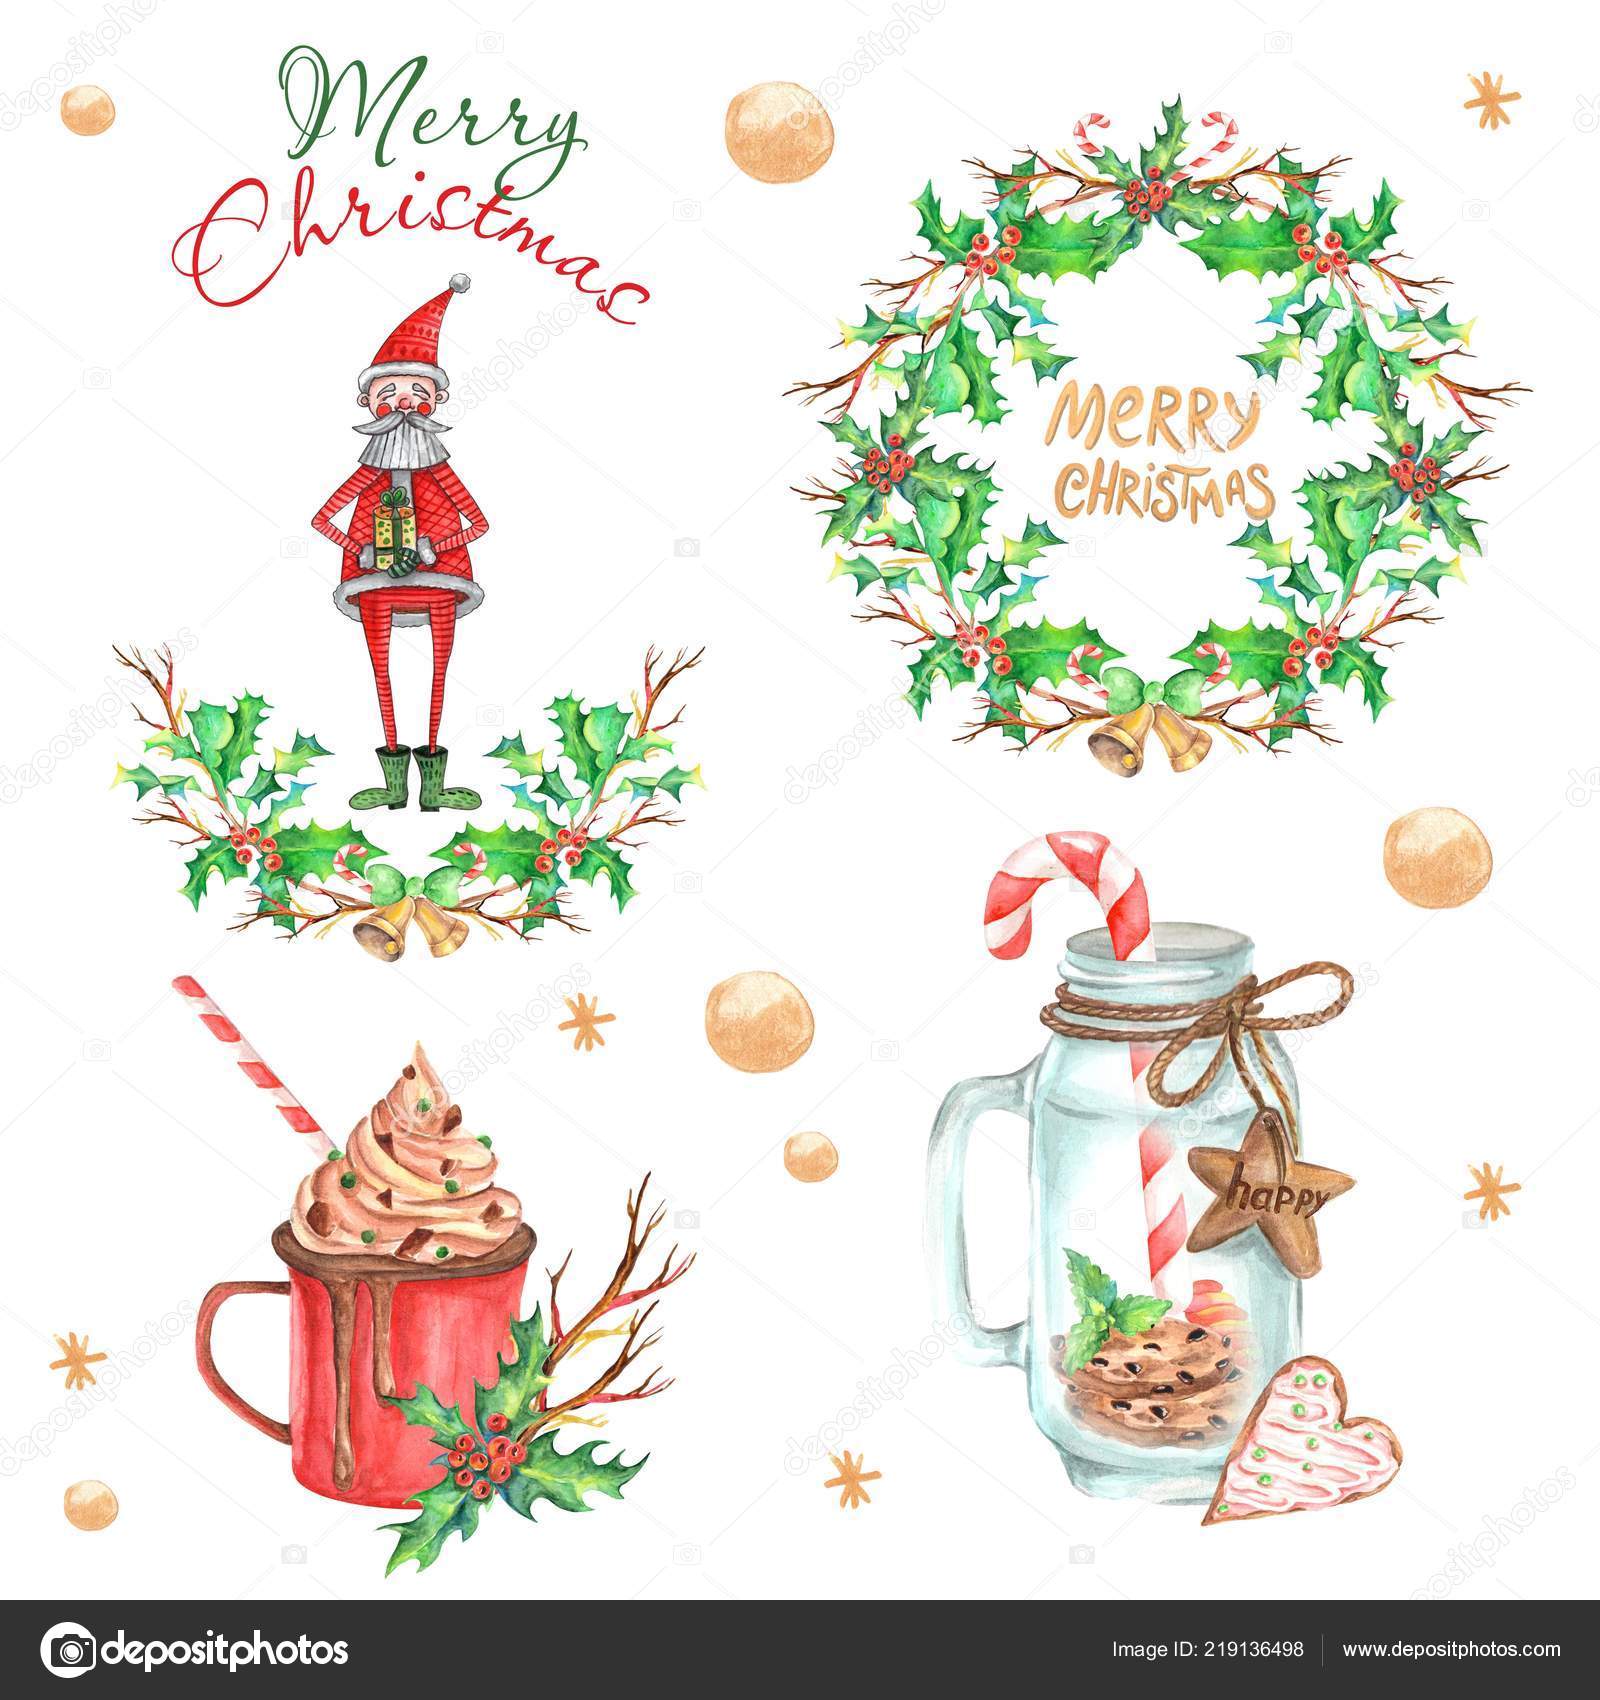 Watercolor Christmas Illustrations Girls Gingerbread Santa Christmas Decorations Christmas Cards Stock Photo C Tatianaross 219136498